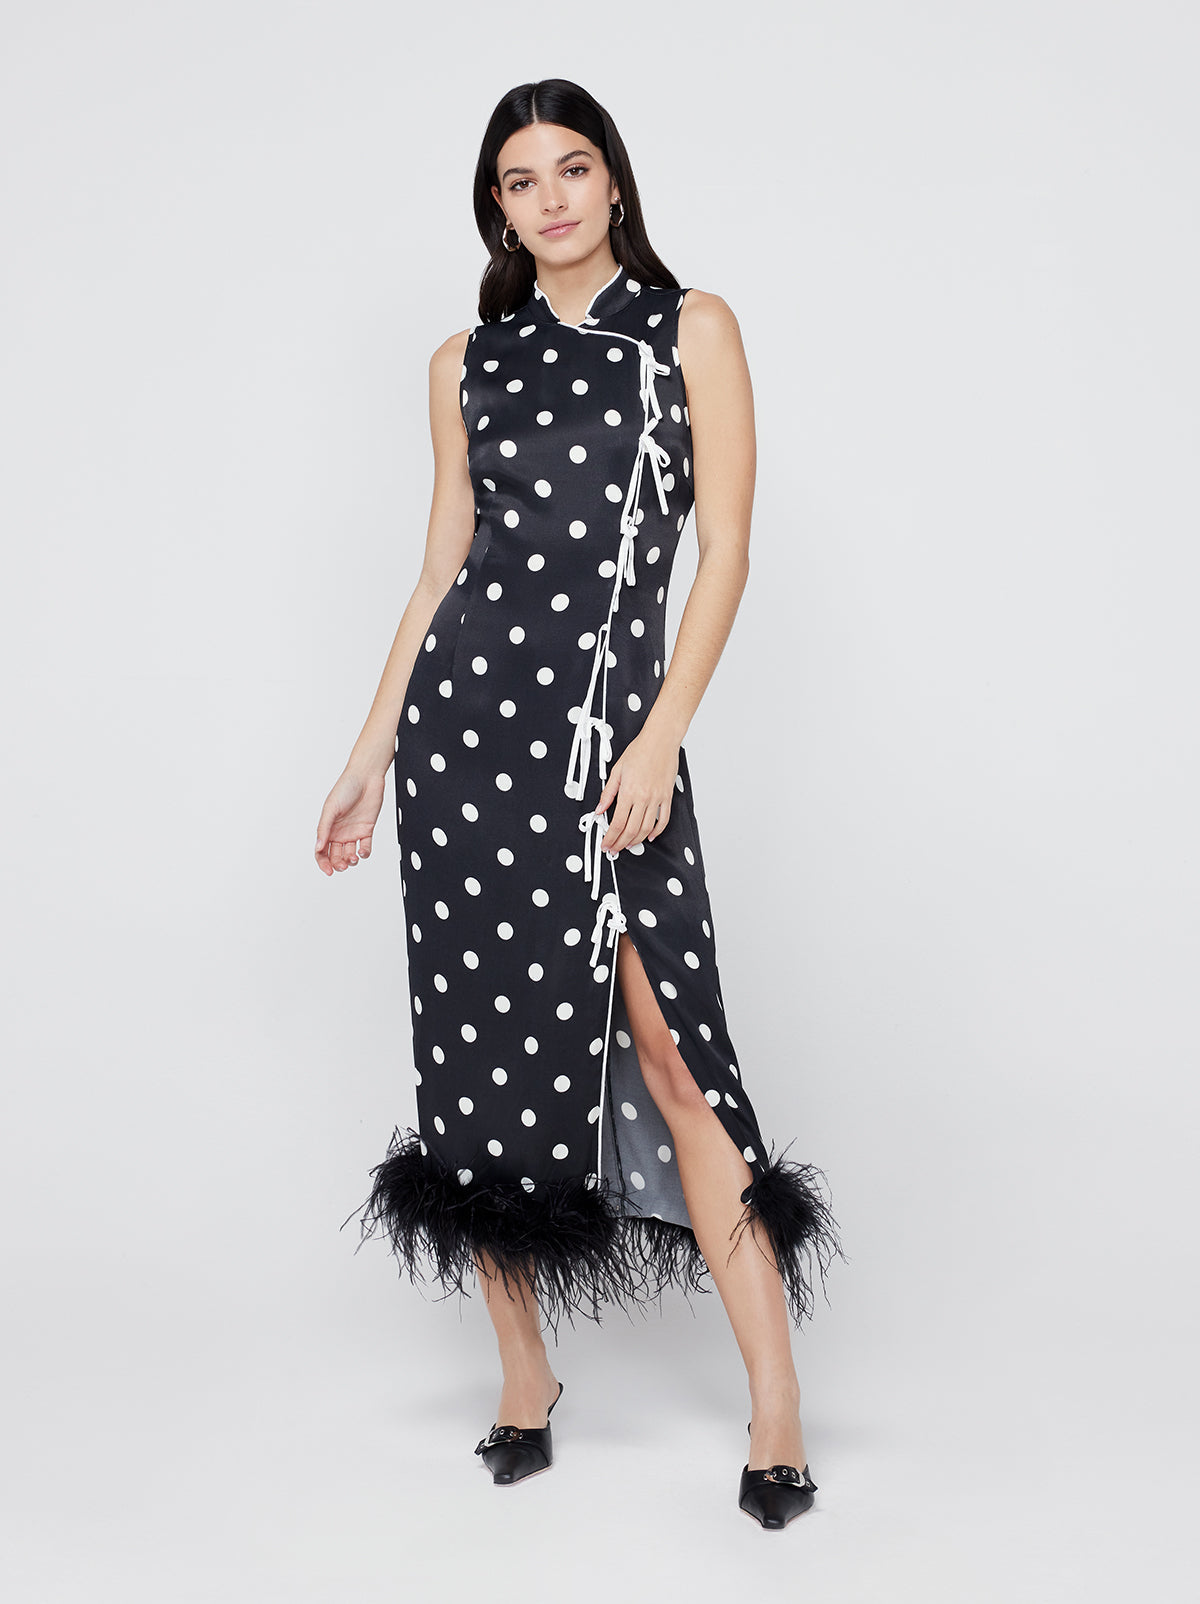 Myla Black Polka Dot Feather Dress By KITRI Studio